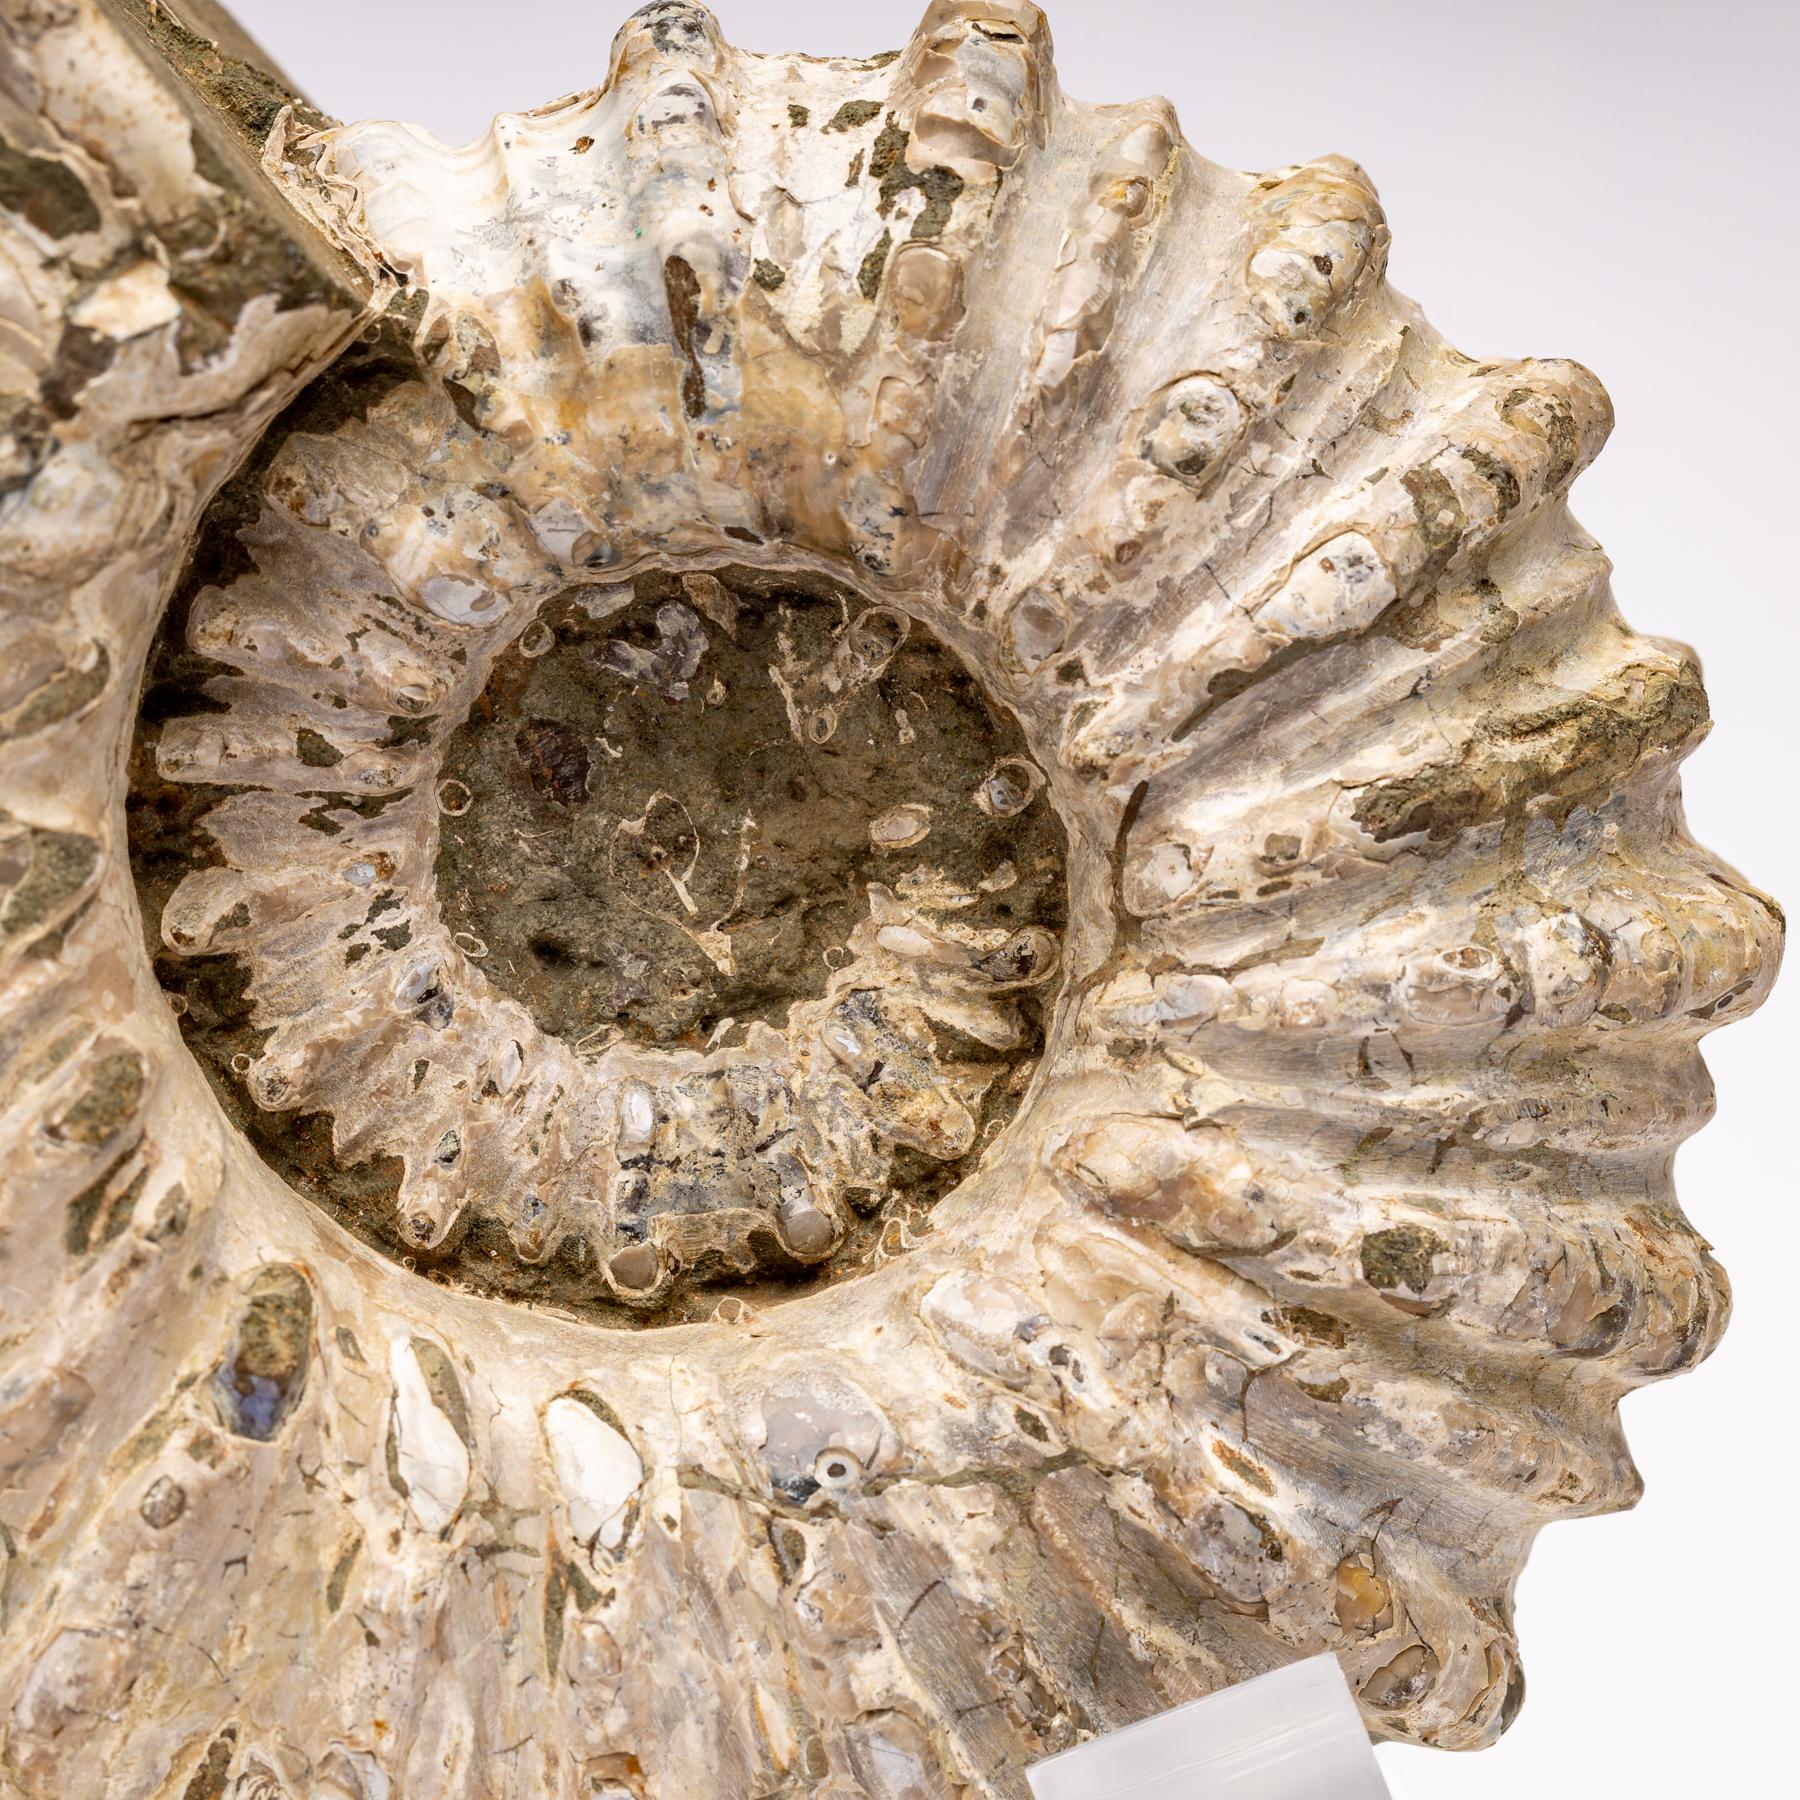 Madagascar Douvilleiceras Ammonite Fossil on Acrylic Base, Cretaceous Period 2